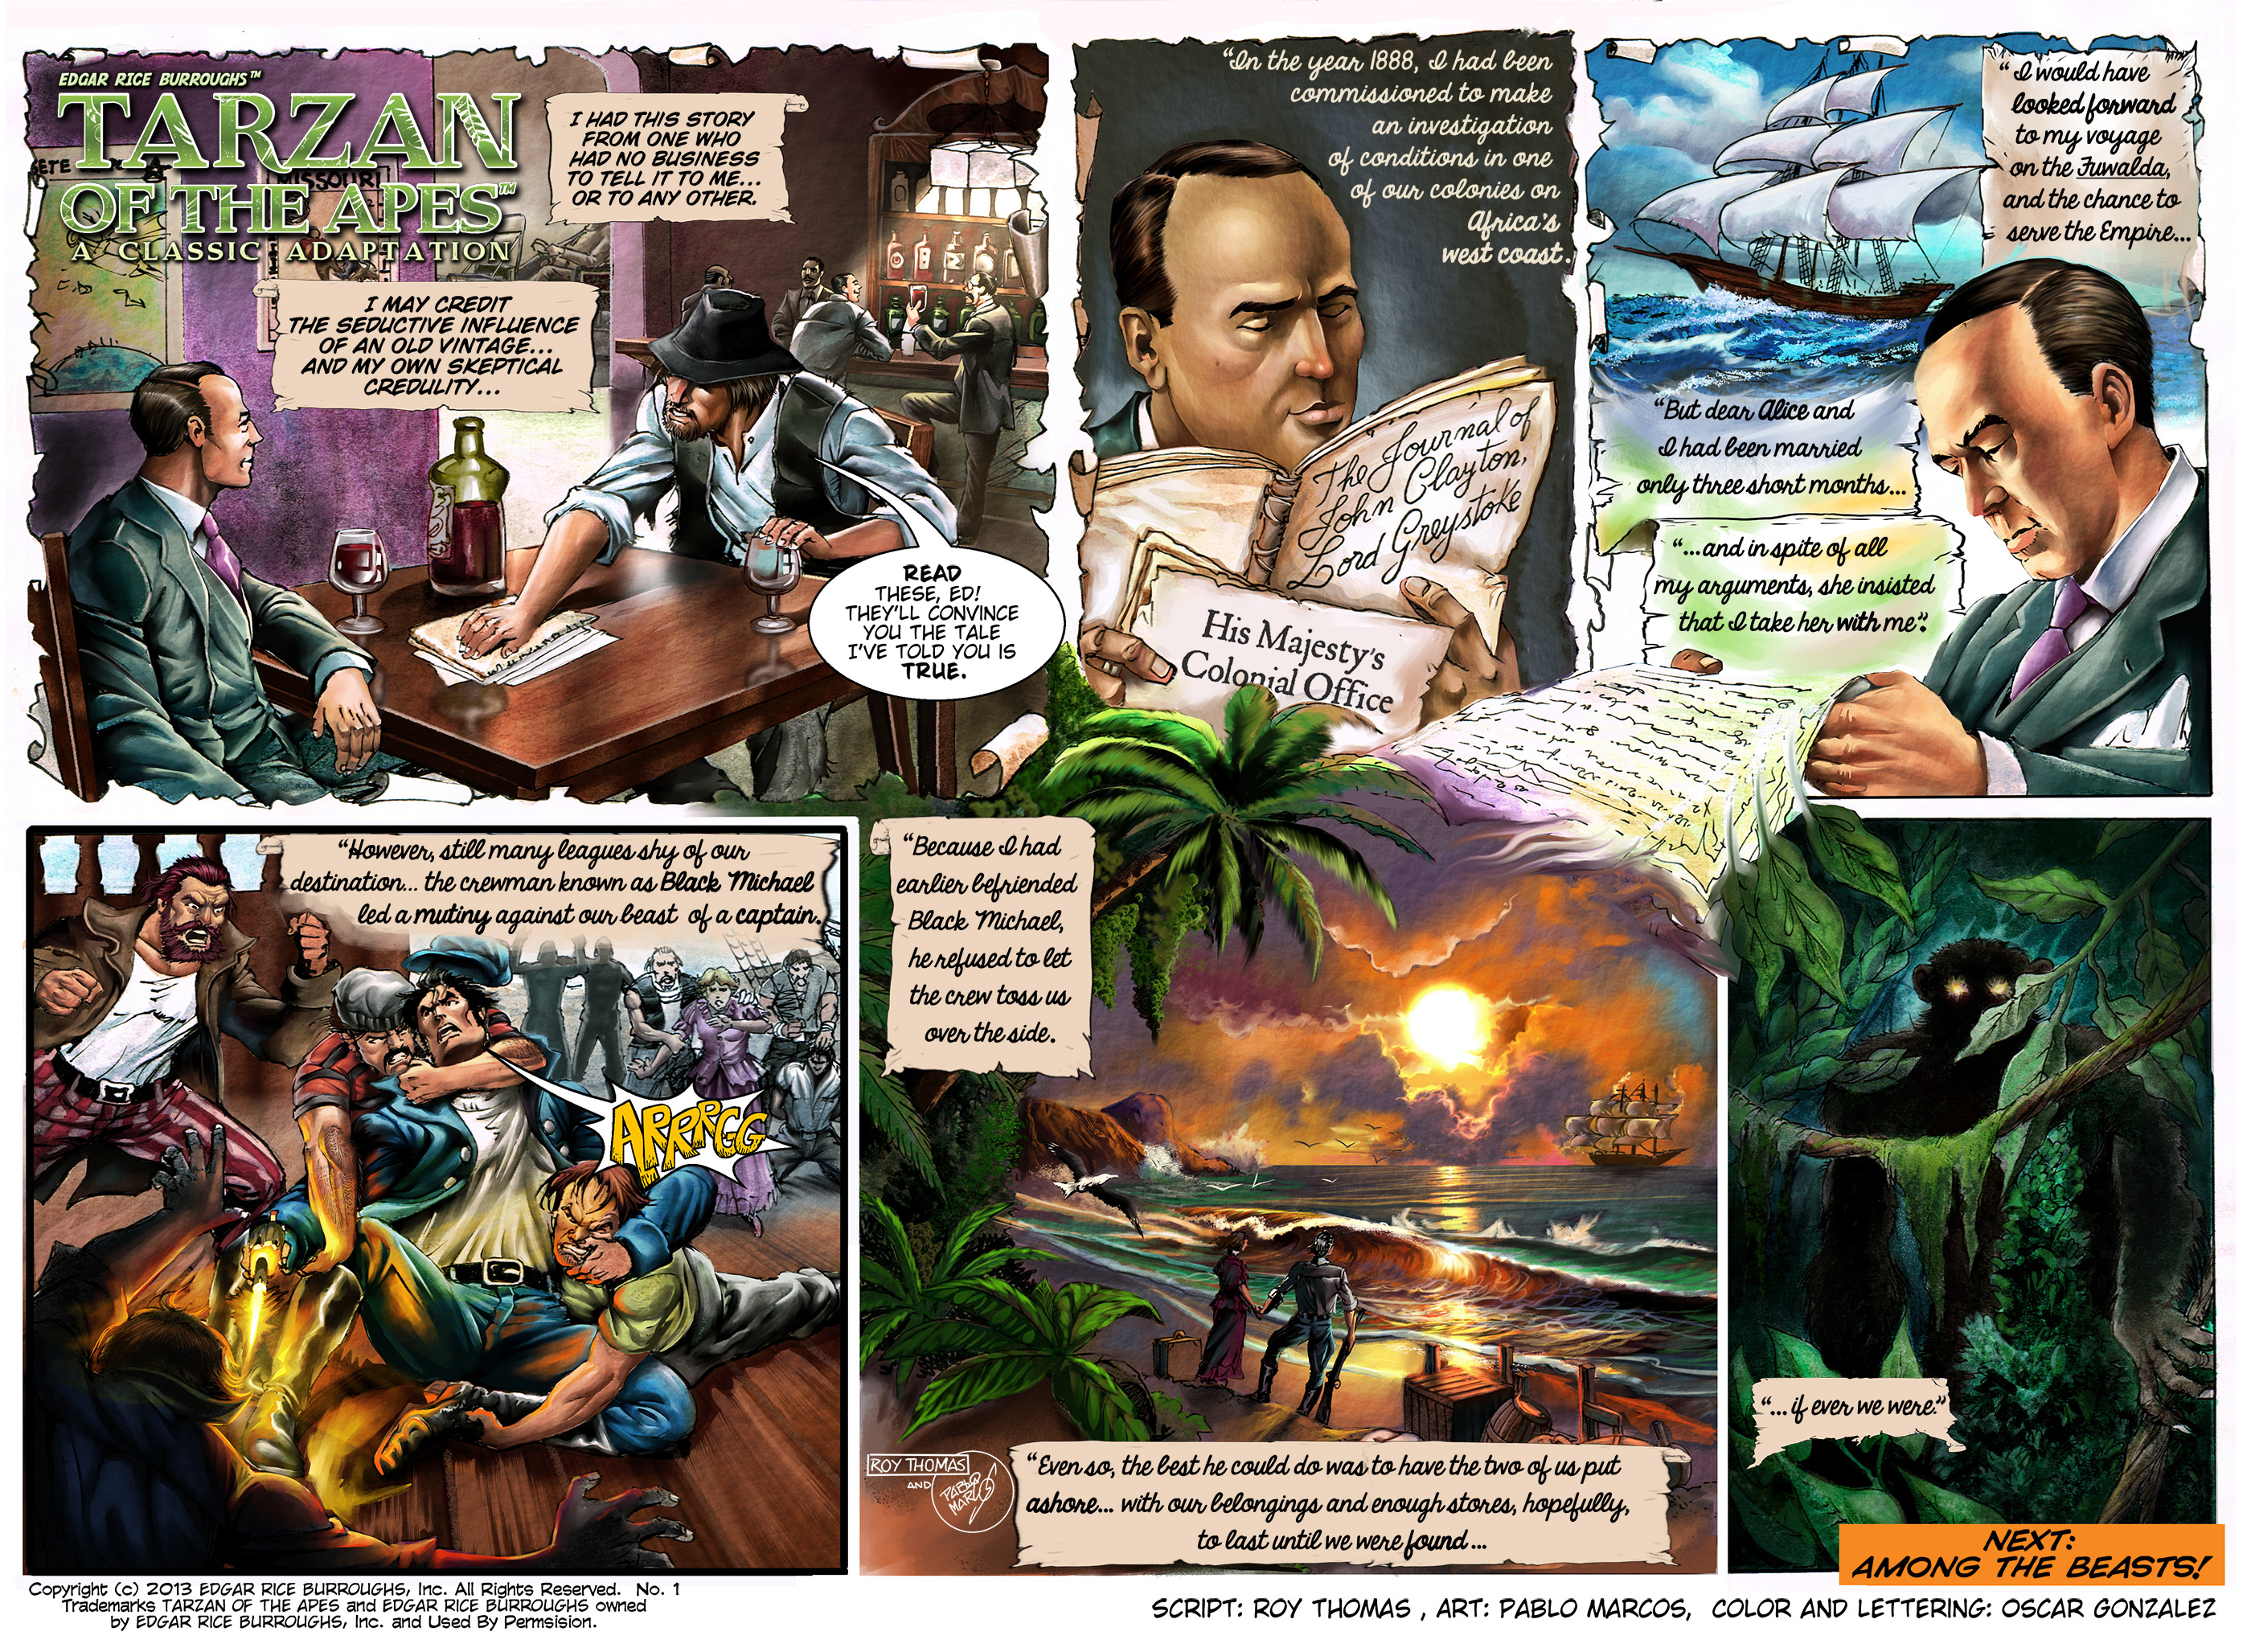 Tarzan Still Lives; All New Artwork and Stories – Comic Strip Fans Do a  Tarzan Yell